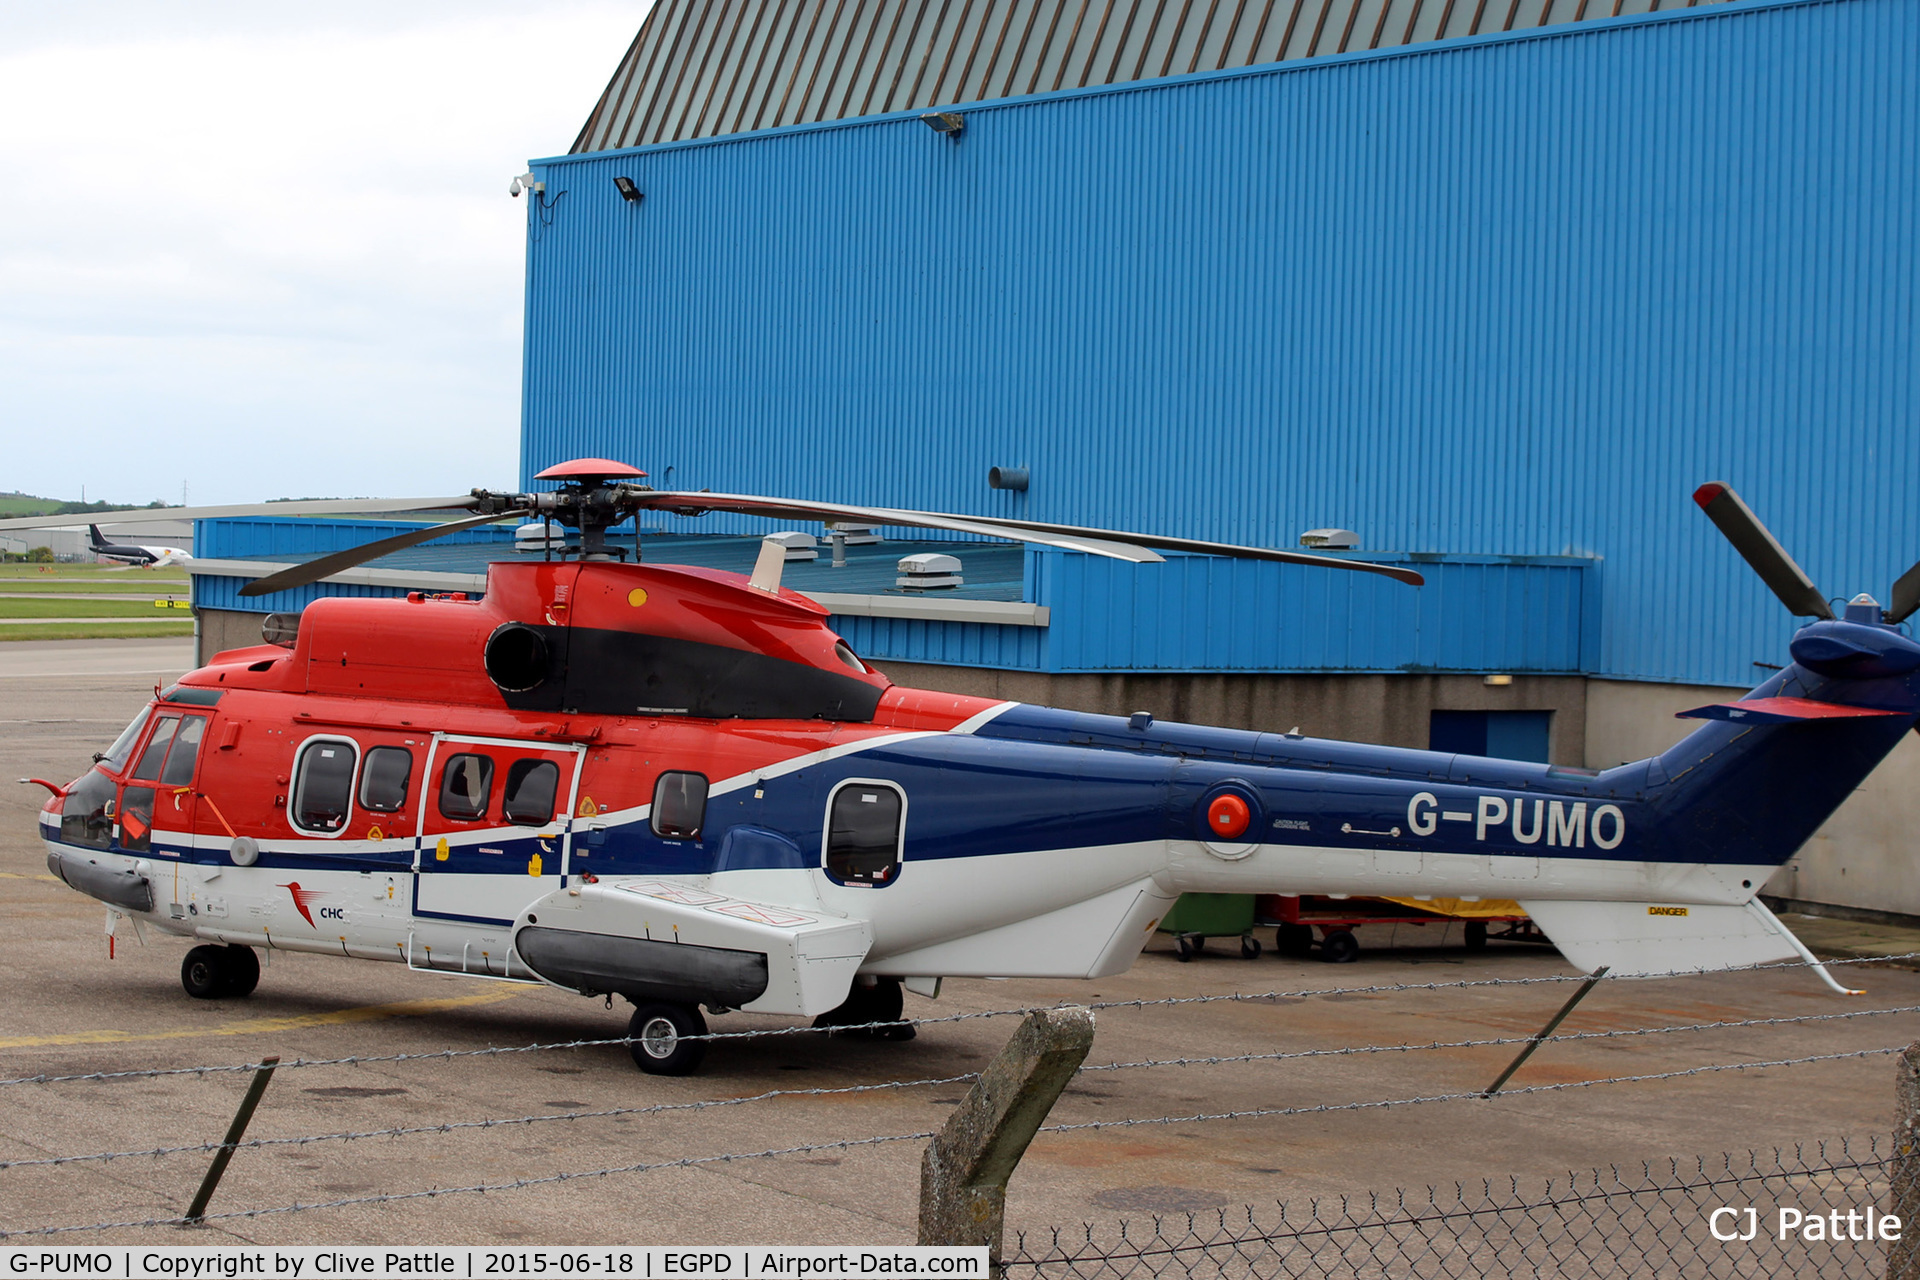 G-PUMO, 1998 Eurocopter AS-332L2 Super Puma Mk2 C/N 2467, Over the fence at Aberdeen Airport, Scotland EGPD